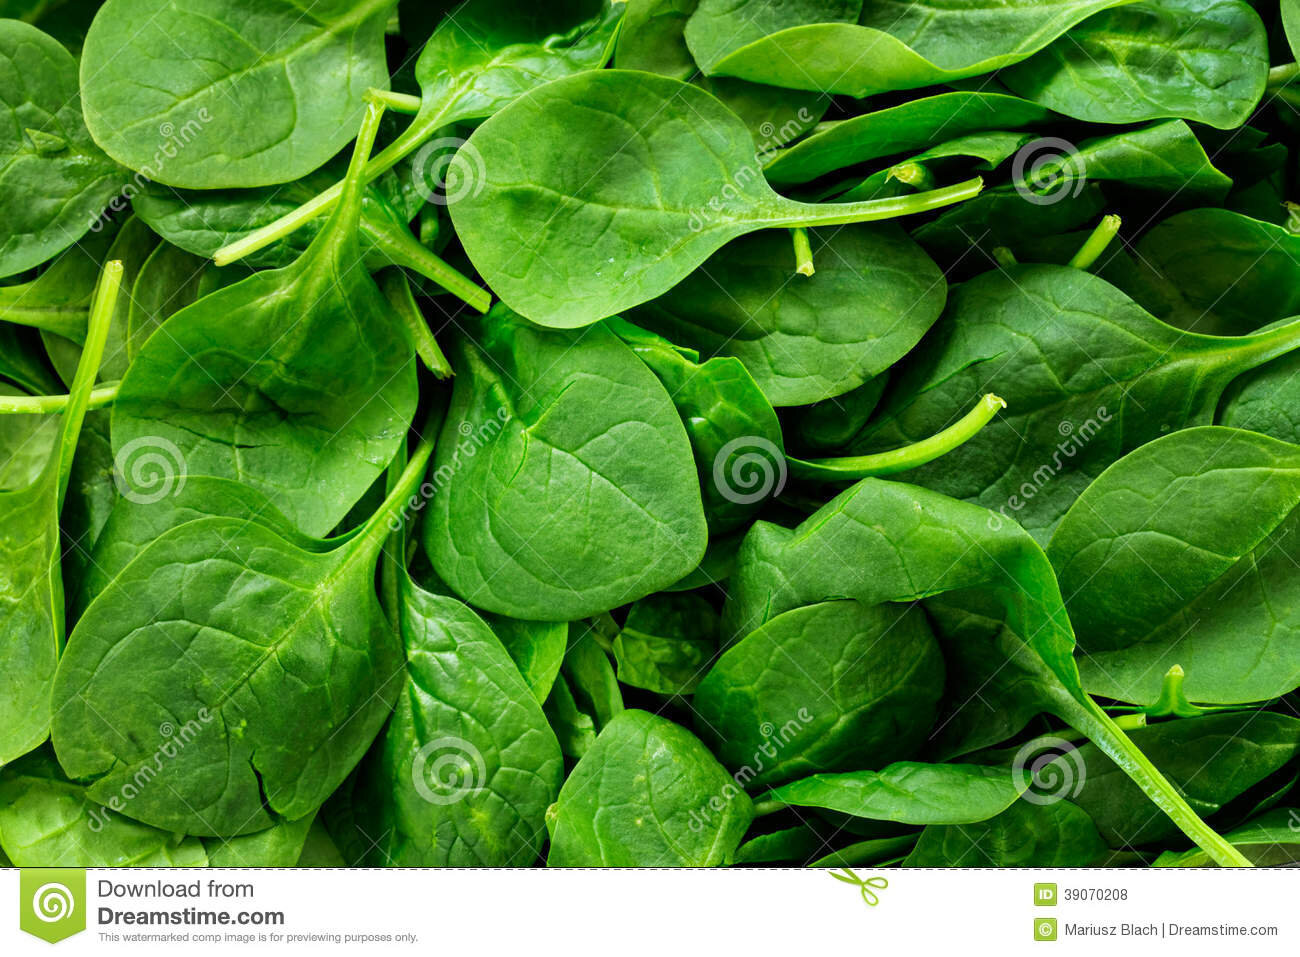 Spinach lettuce.jpeg